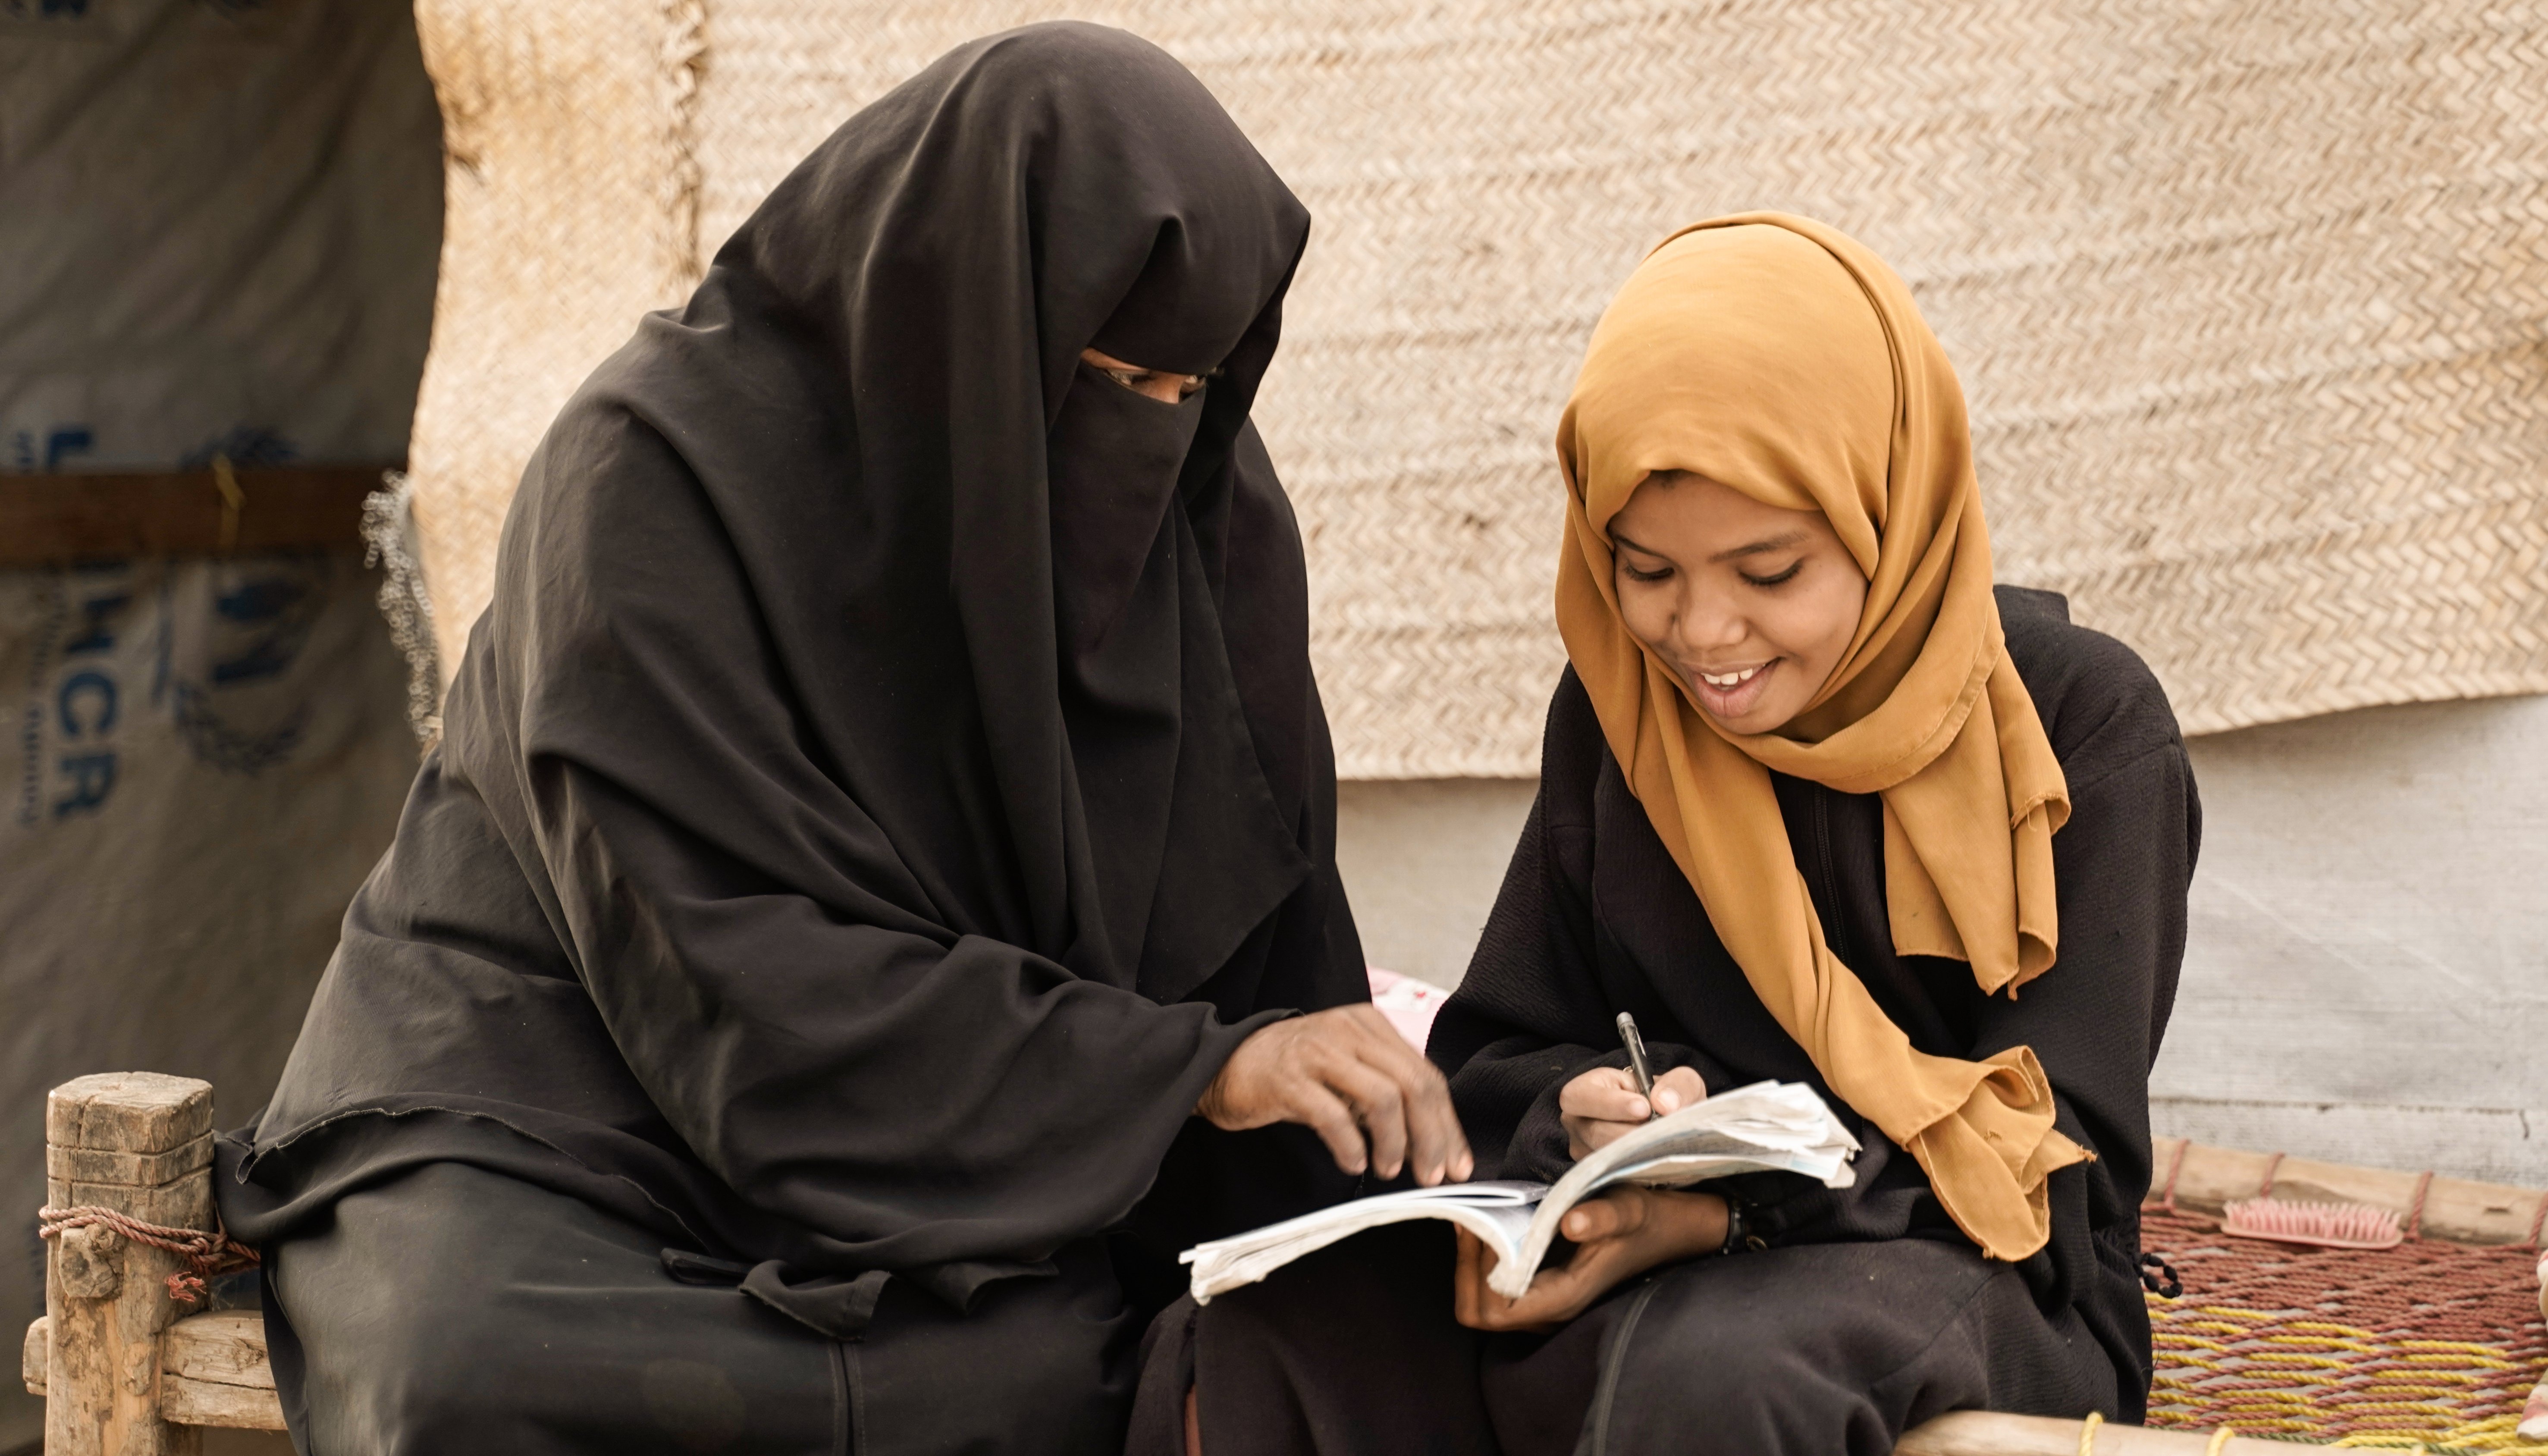 Read قصة هيفاء: نموذج لقيادة التحول نحو سبل عيش ريفية مستدامة للنساء في اليمن by Communications UNDP Yemen